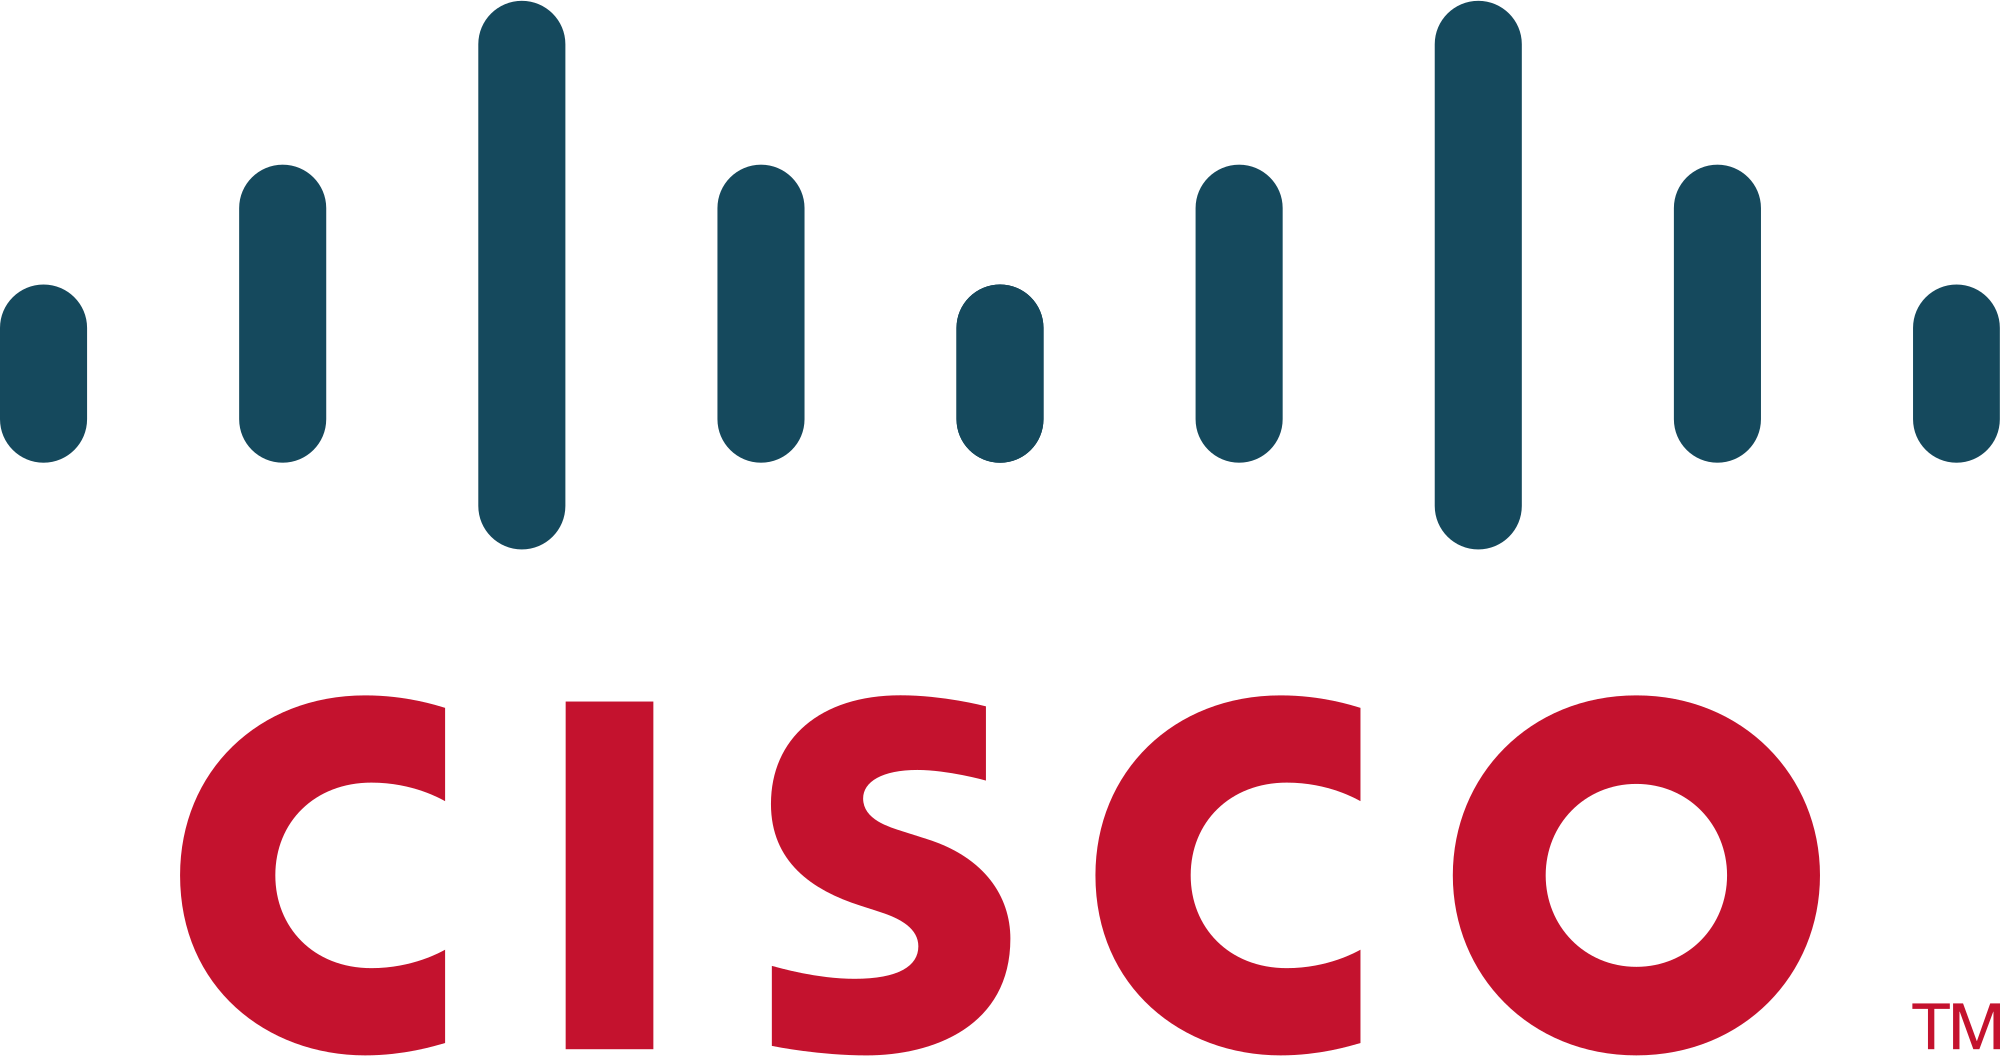 Fan Conspiracy client Cisco Logo